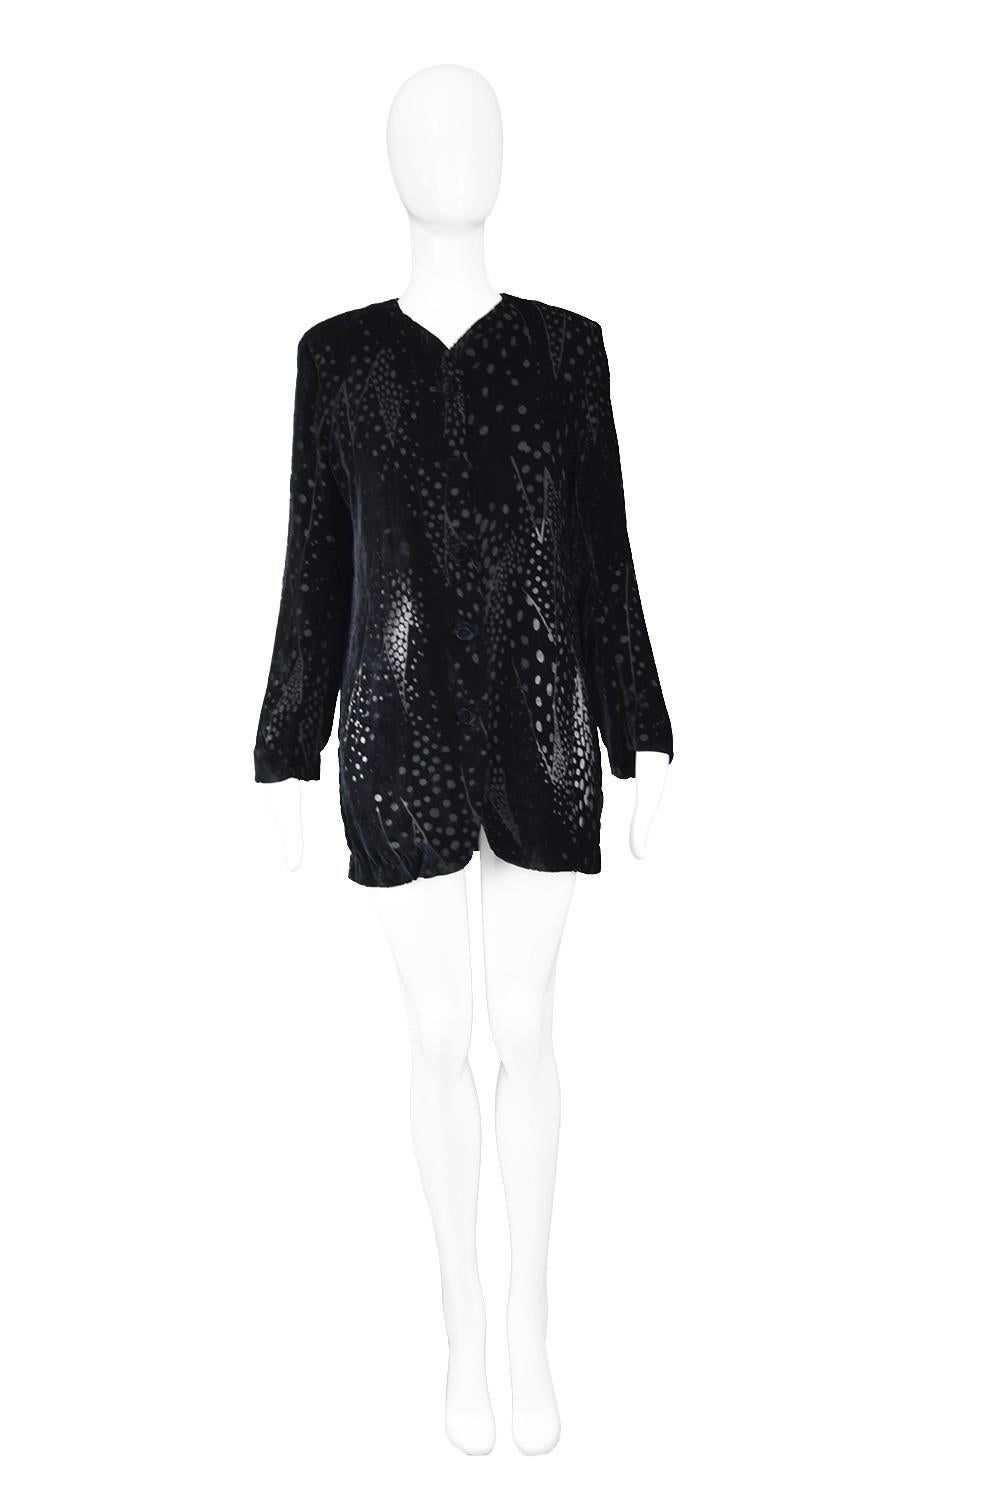 Georgina von Etzdorf Black Silk Devore Burnout Velvet Evening Blazer Jacket, 1980s 

Size: UK 12-14/ US 8-10/ EU 40-42. Please check measurements.
Bust - 38” / 96cm 
Waist - 38” / 96cm
Hips - 40” / 101cm
Length (Shoulder to Hem) - 30” /